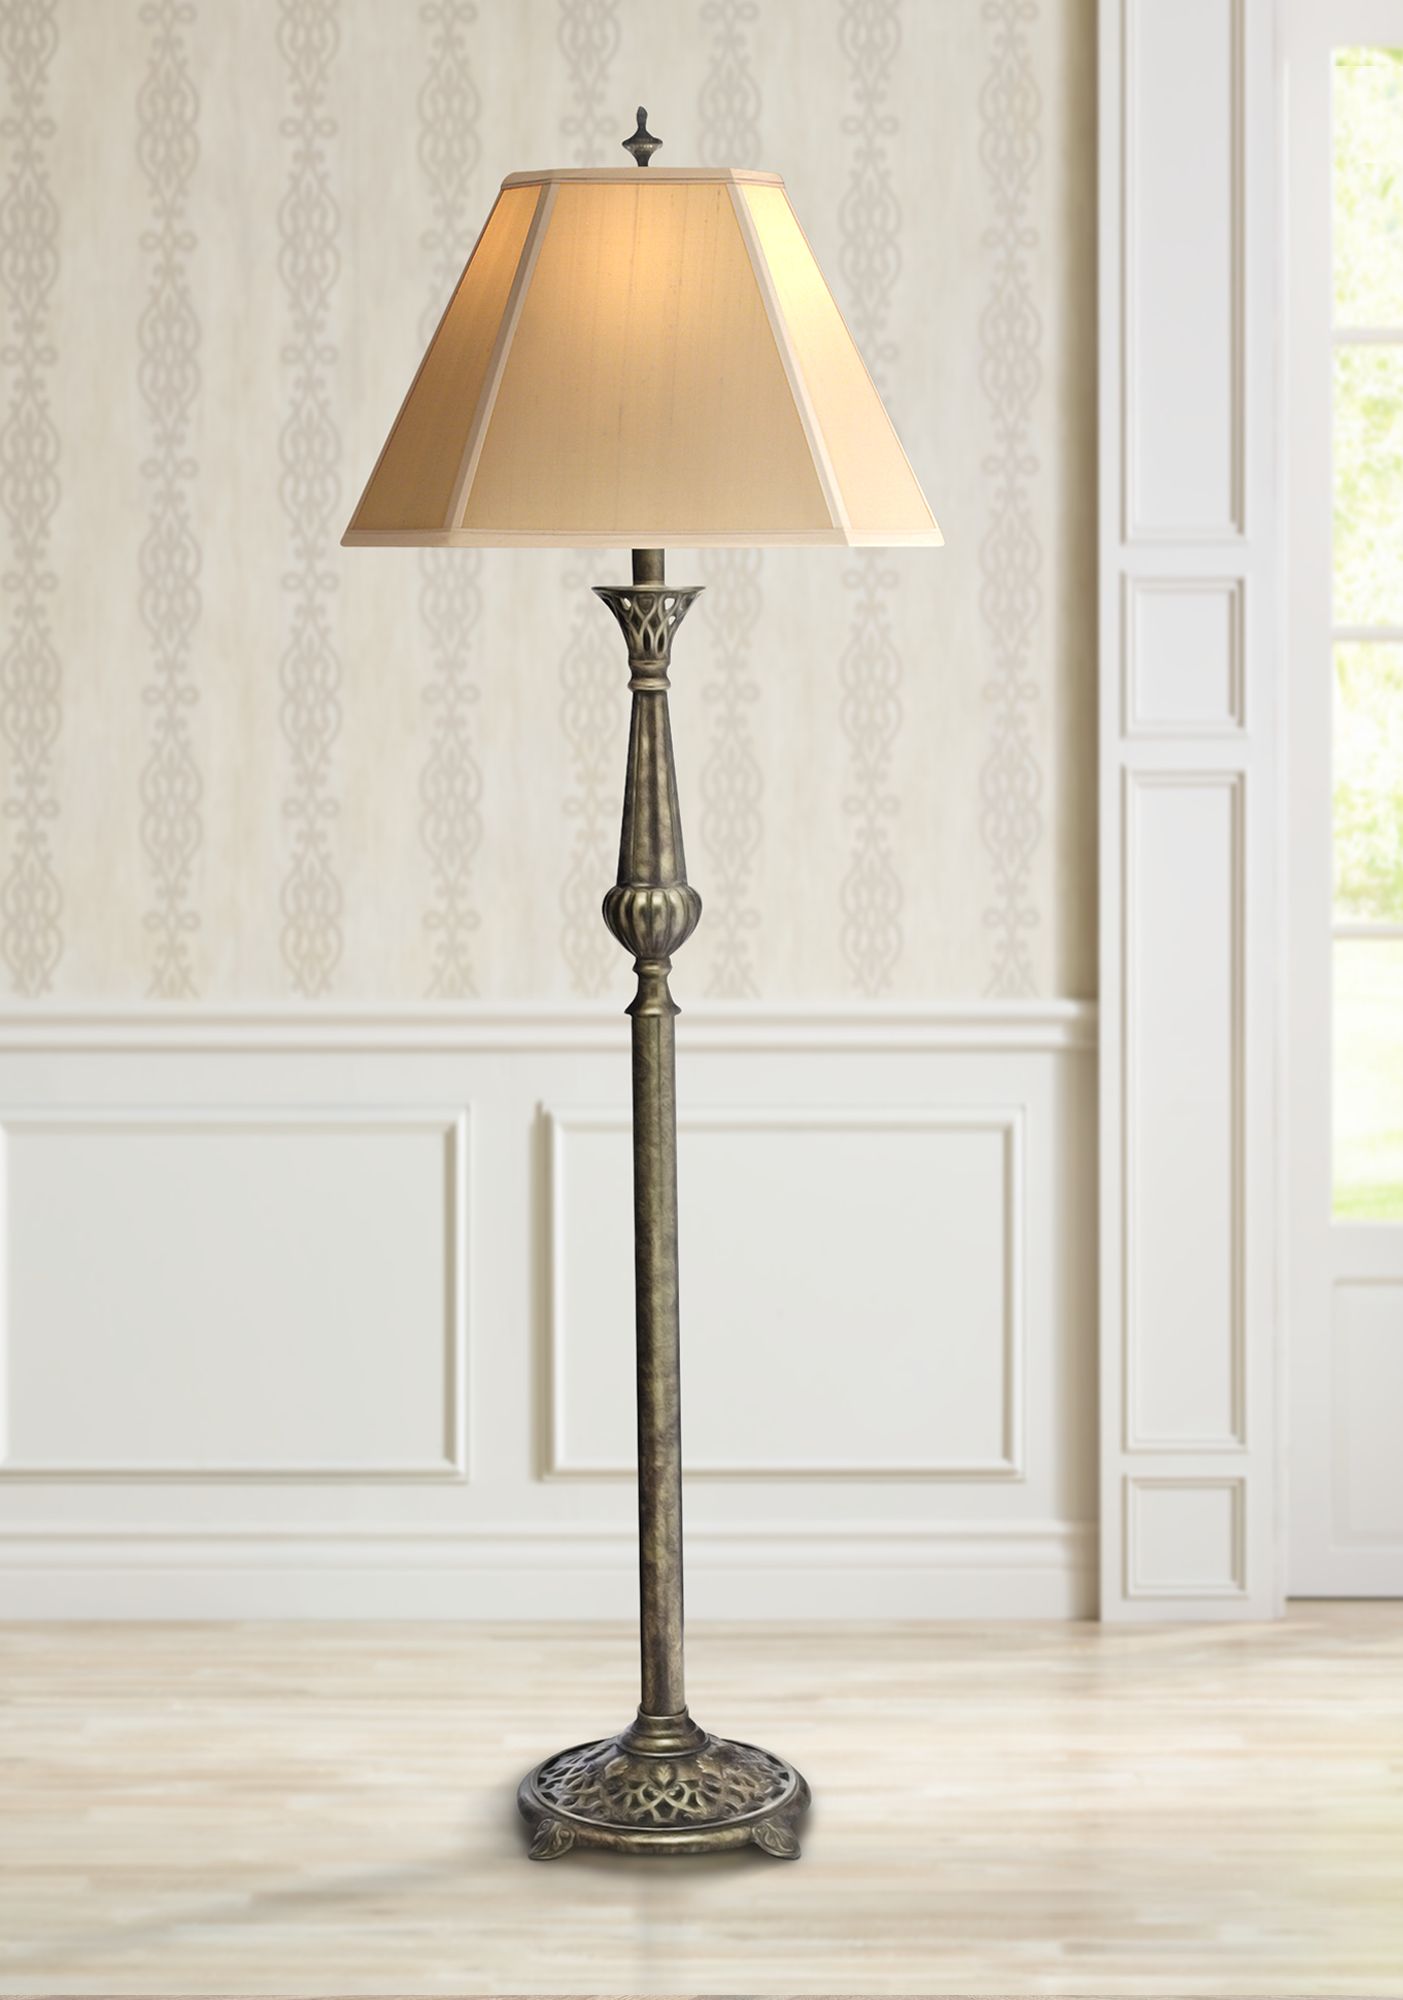 traditional floor lamp